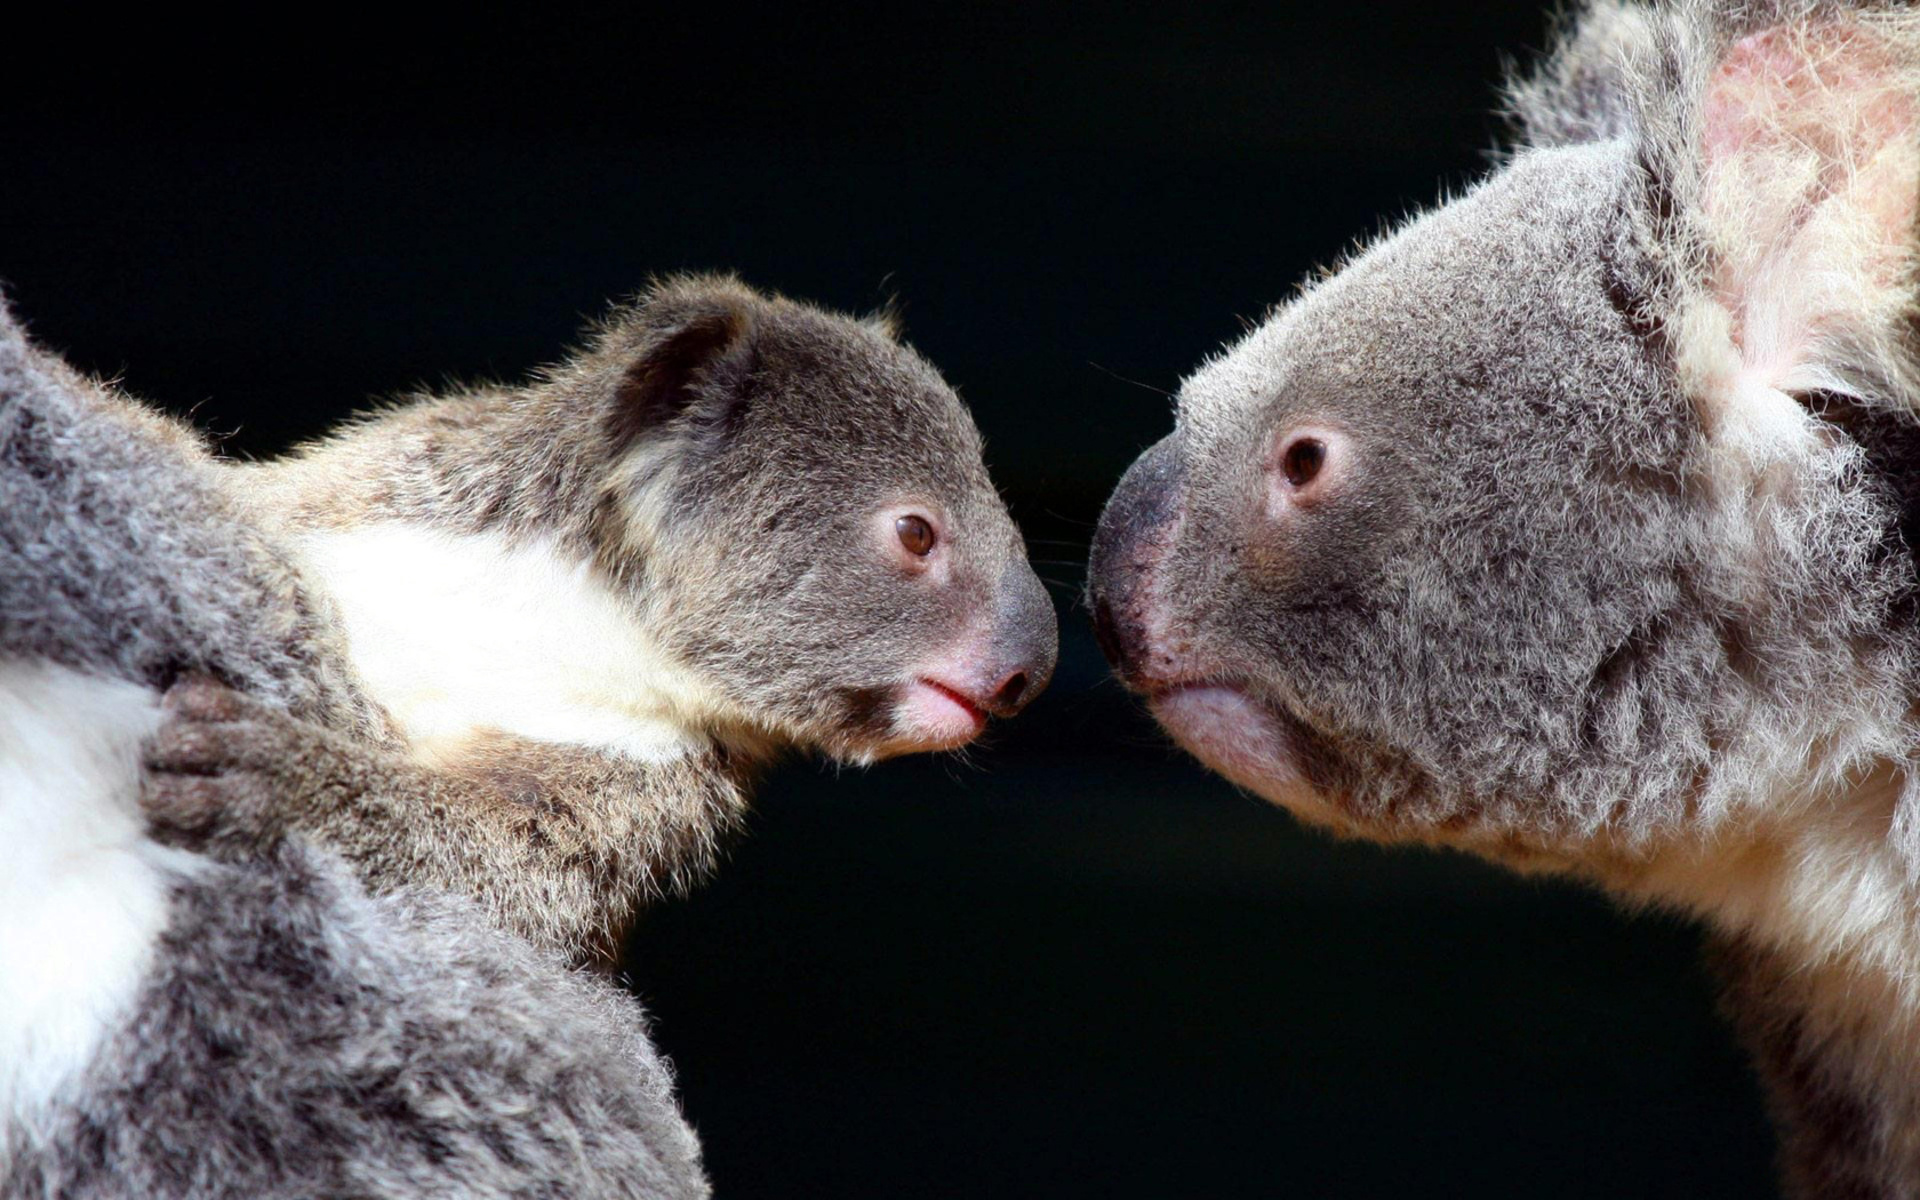 Cute Baby Koala Wallpaper Animal Humor